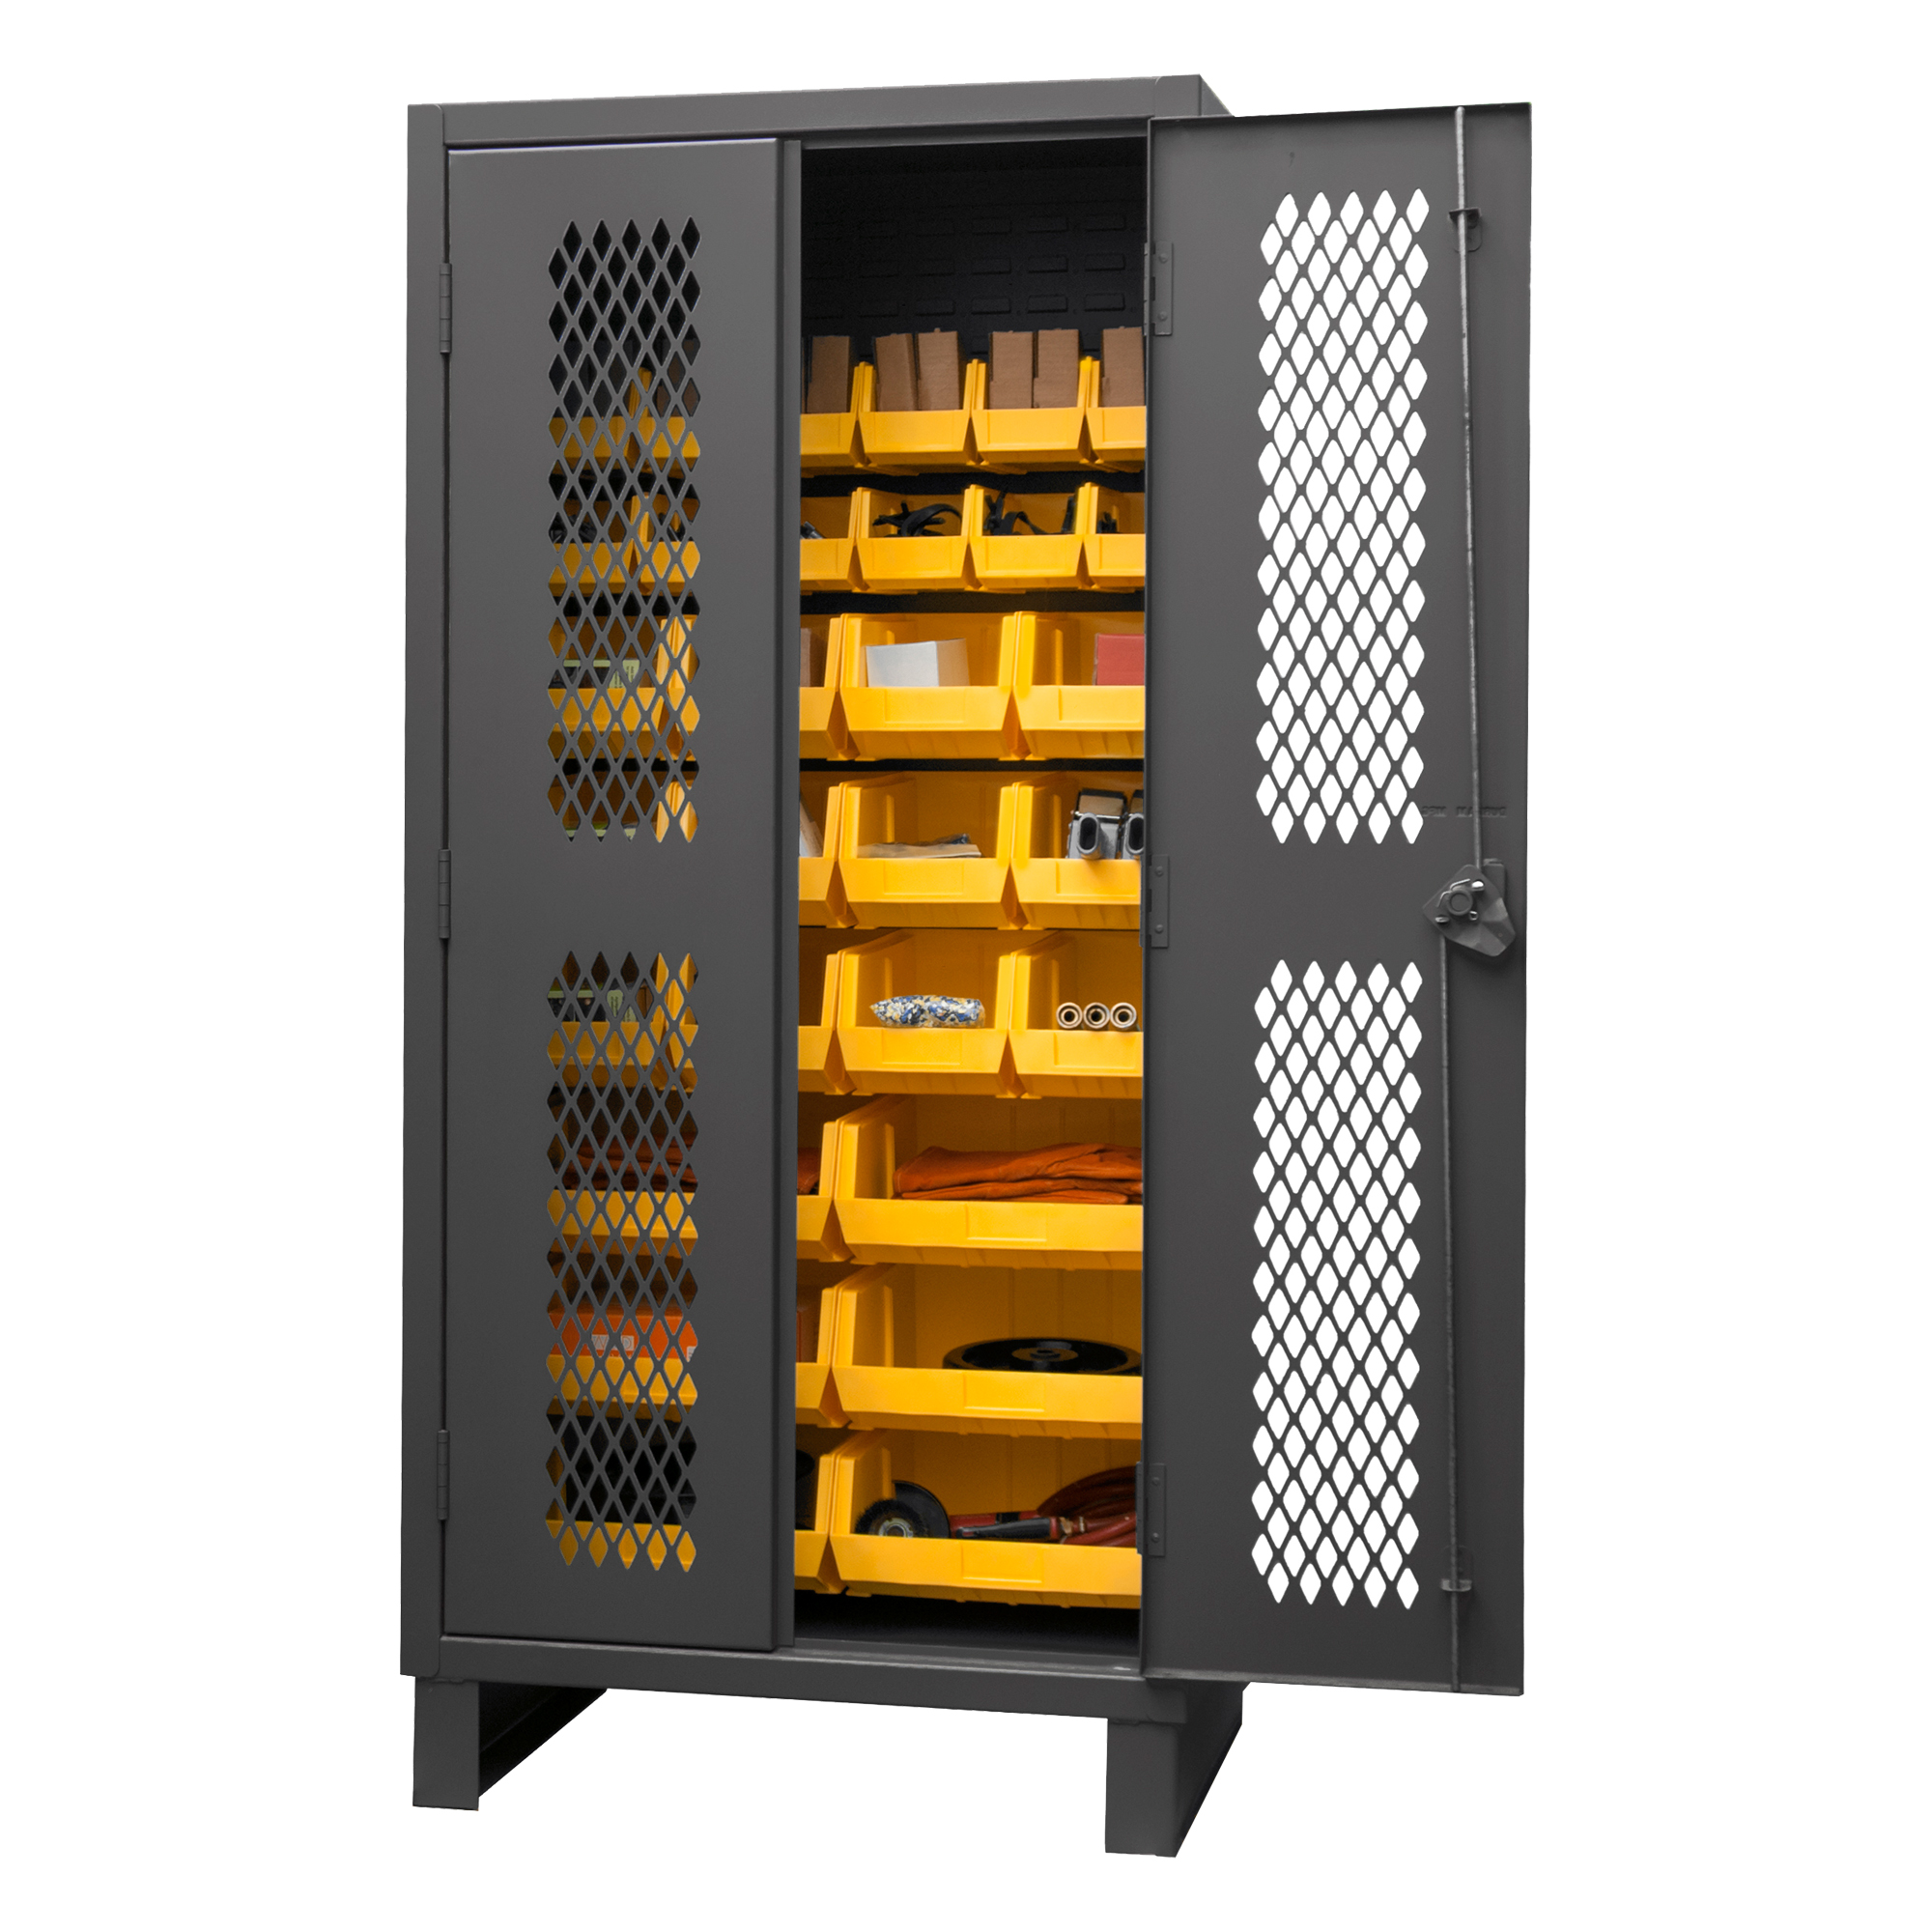 Ventilated Cabinet, 12 Gauge, 30 Yellow Bins, 36 x 24 x 78